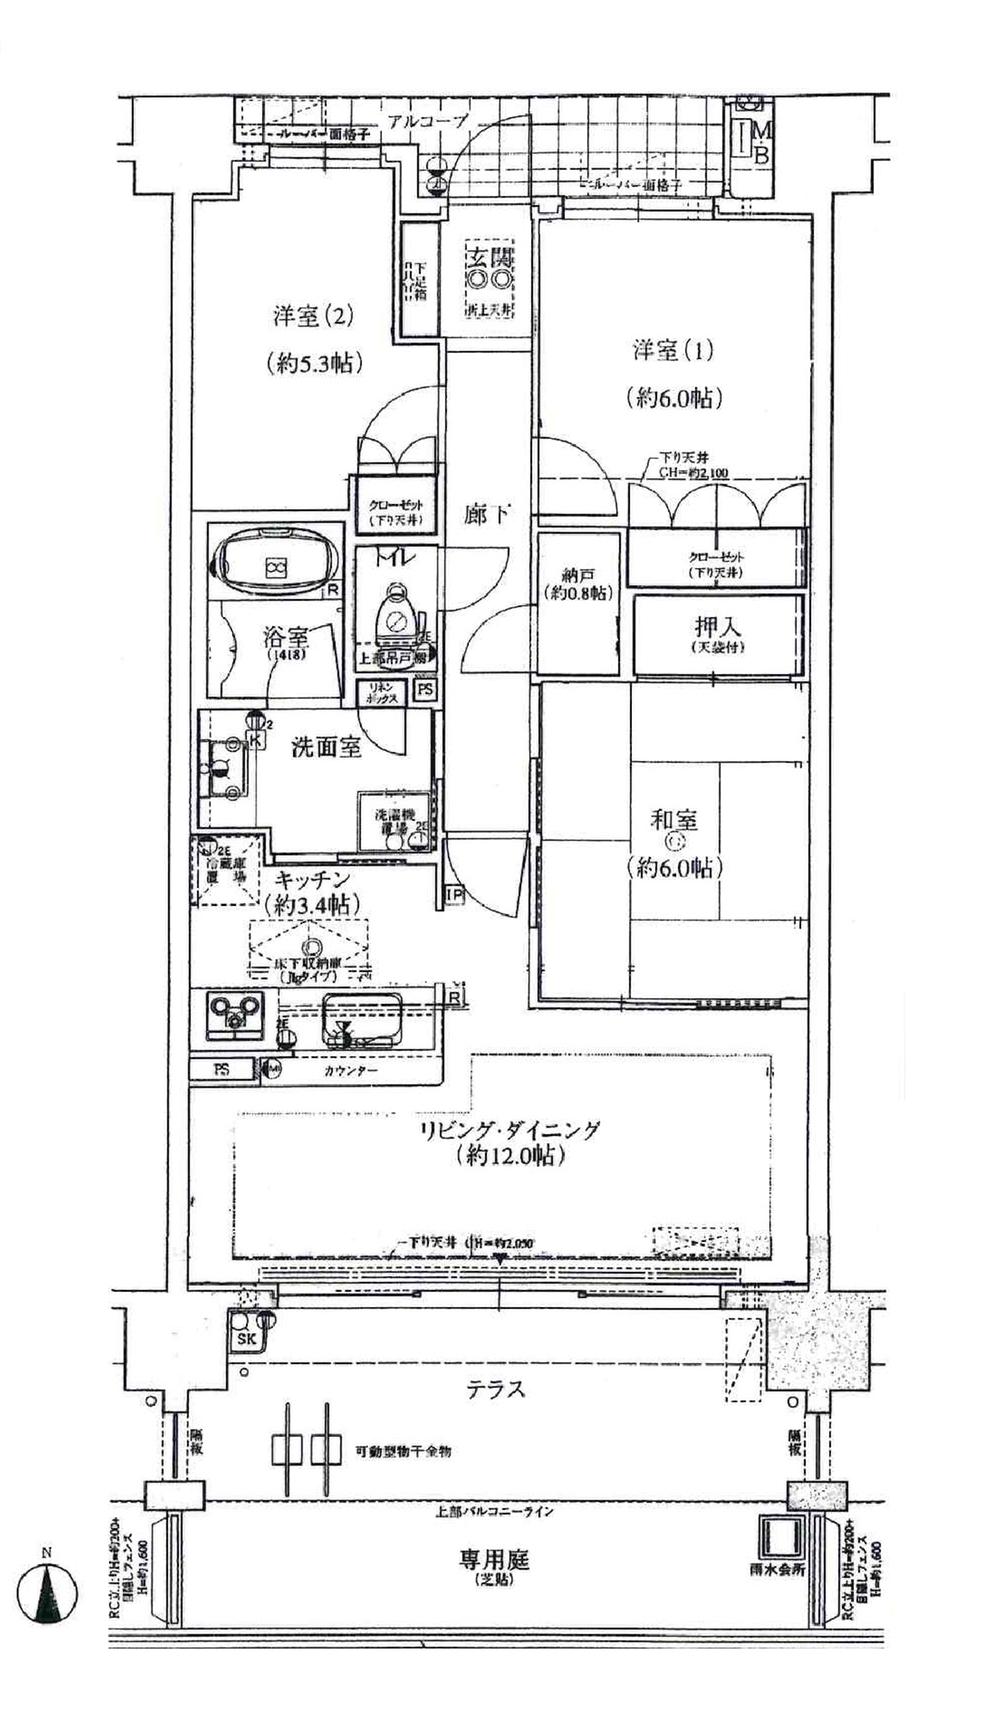 Floor plan. 3LDK + S (storeroom), Price 29 million yen, Occupied area 74.39 sq m , Balcony area 13 sq m floor heating ・ In town, such as the bathroom drying heater